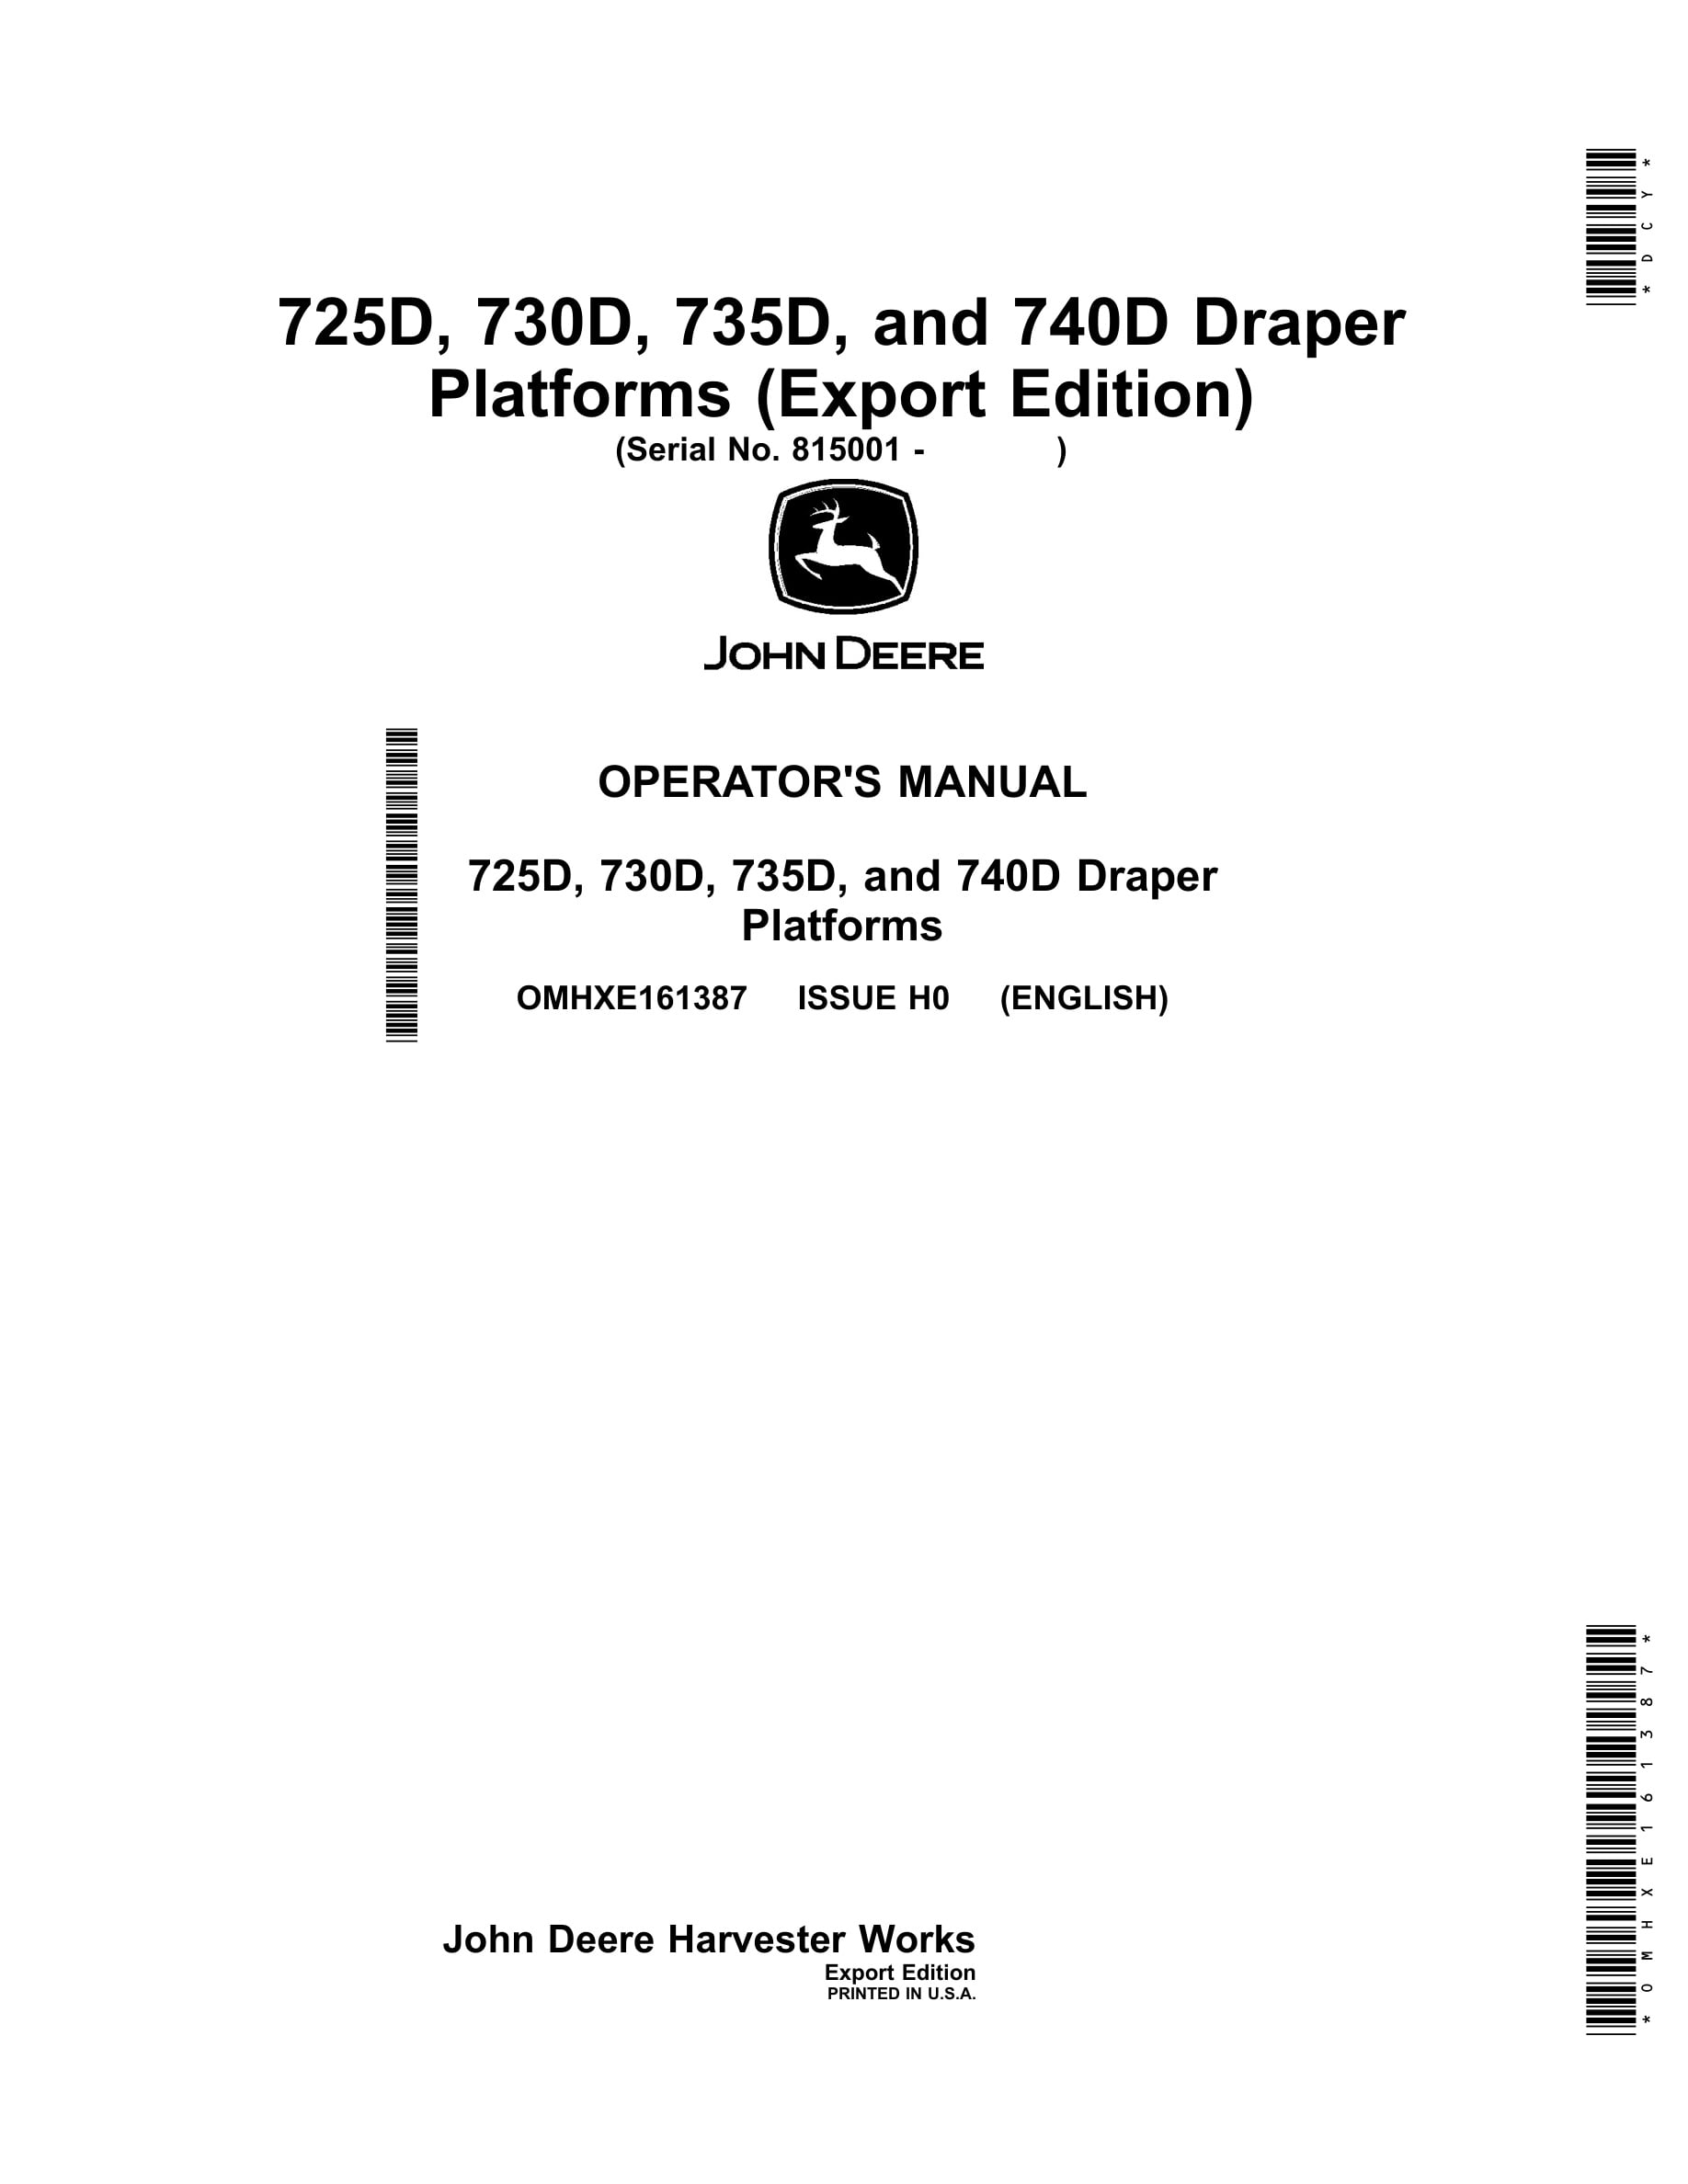 John Deere 725D, 730D, 735D, and 740D Draper Platforms Operator Manual OMHXE161387-1